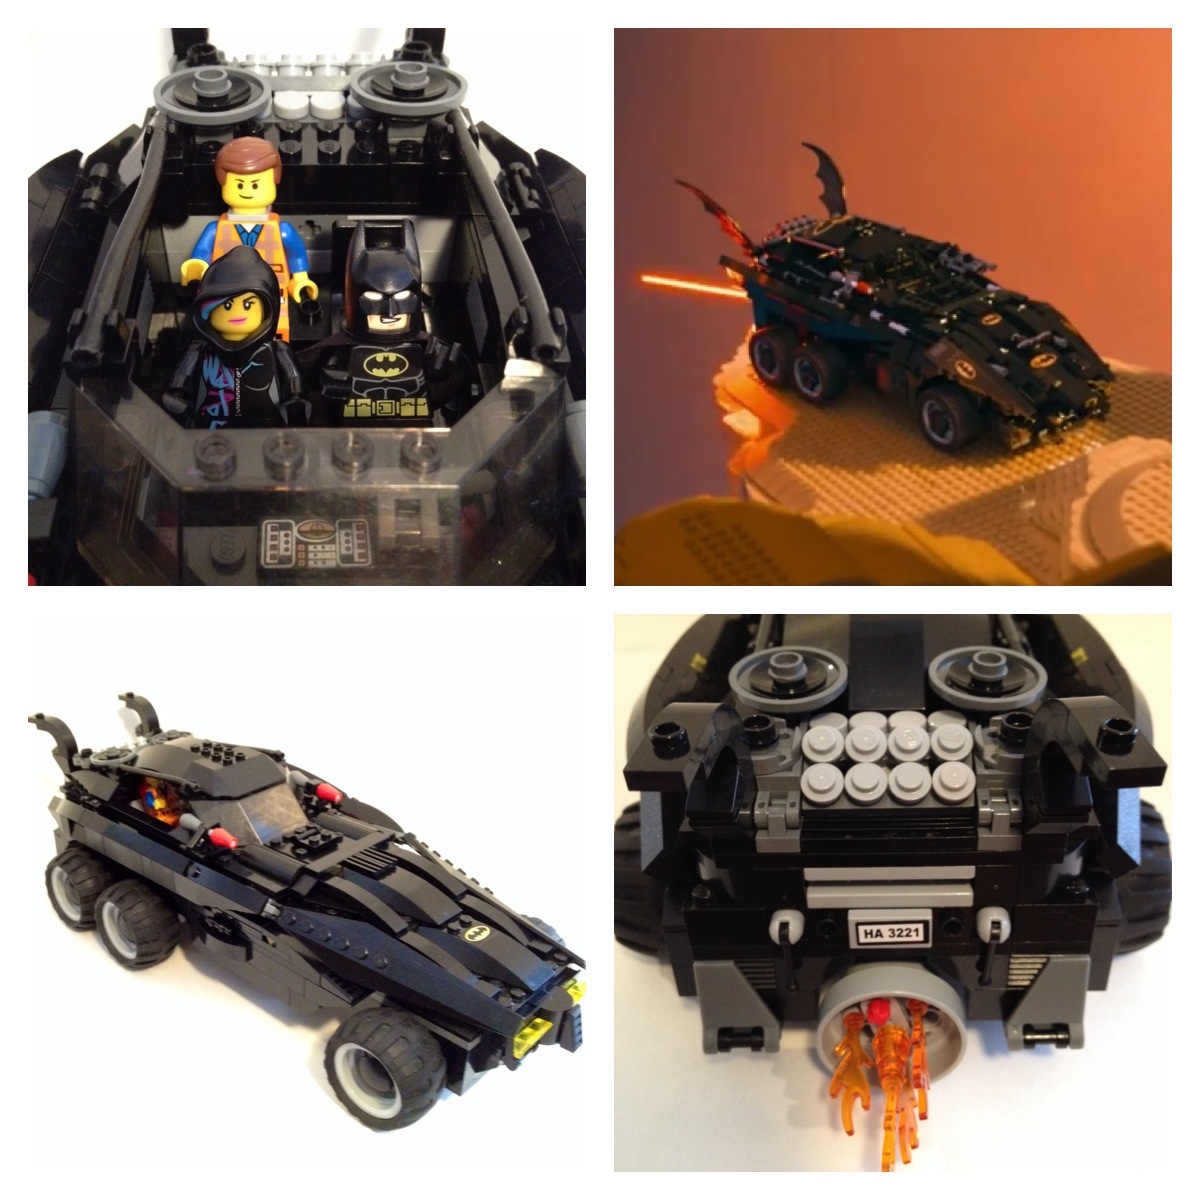 Batwing MOC from The Lego Movie - Building LEGO - BRICKPICKER